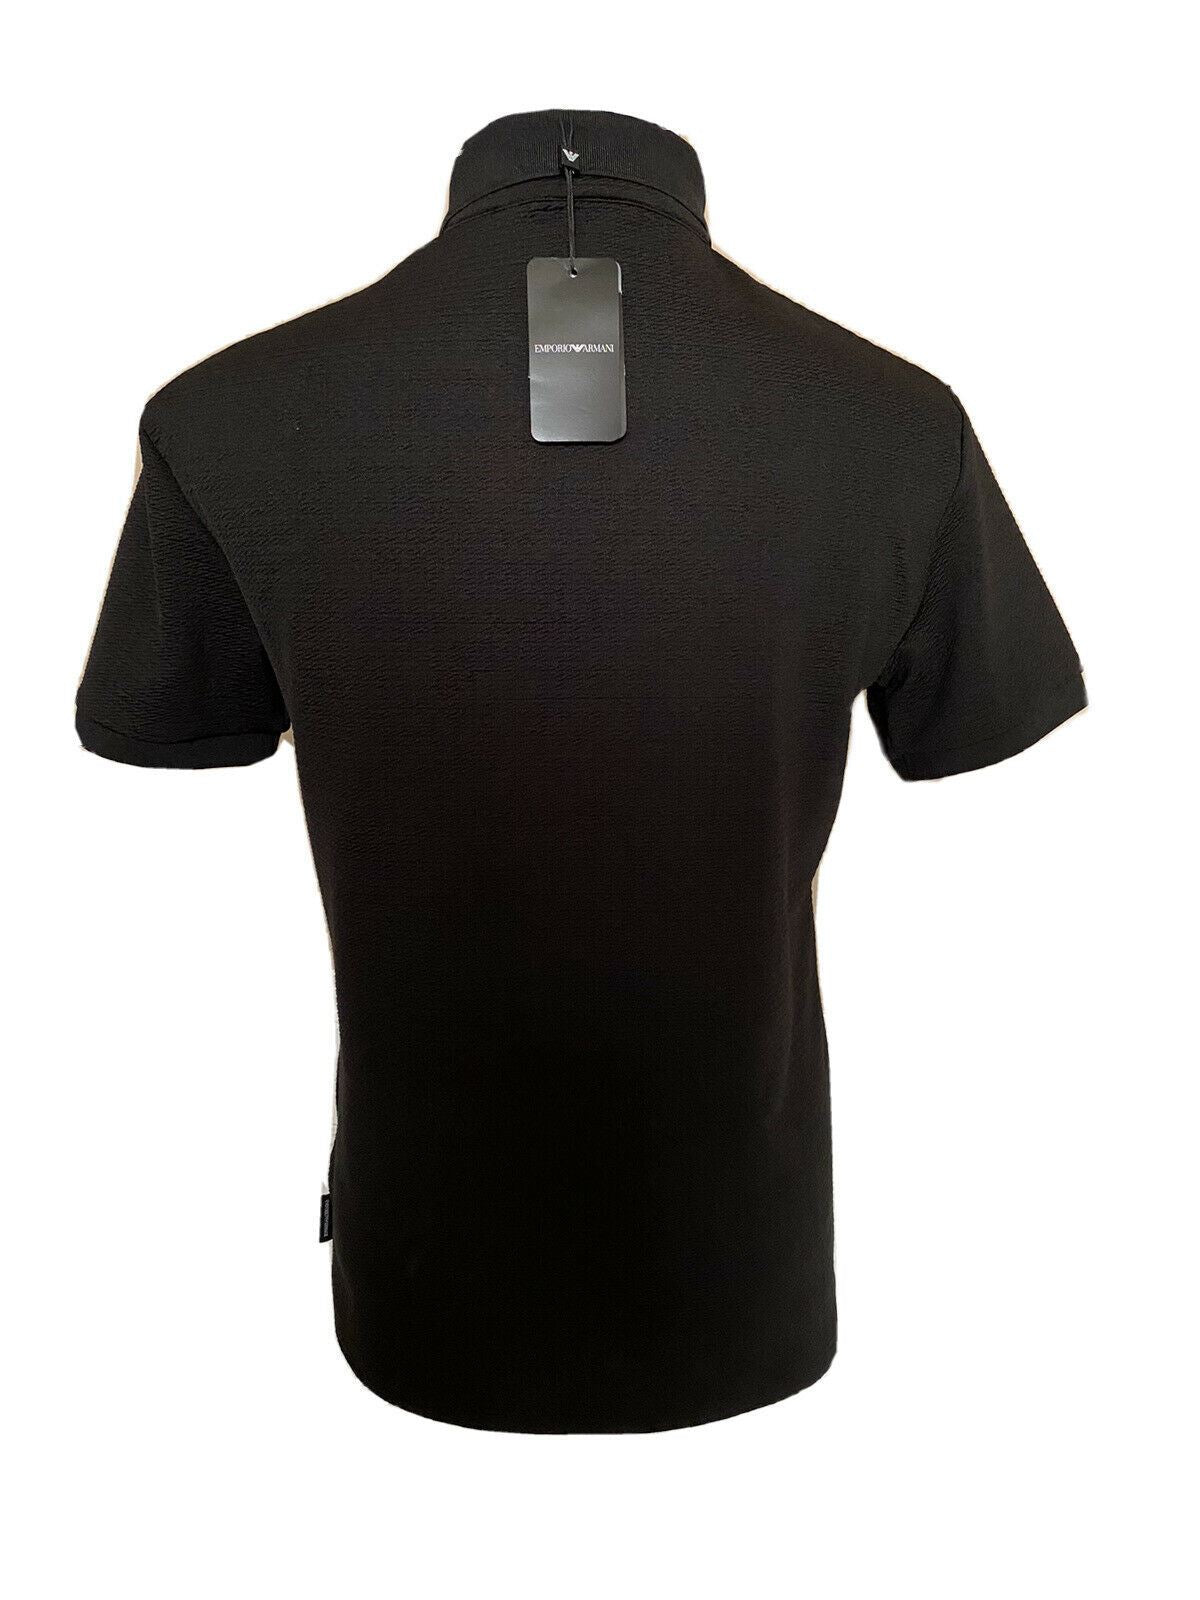 Черная рубашка-поло с коротким рукавом Emporio Armani 3G1F72, NWT 245 долларов США